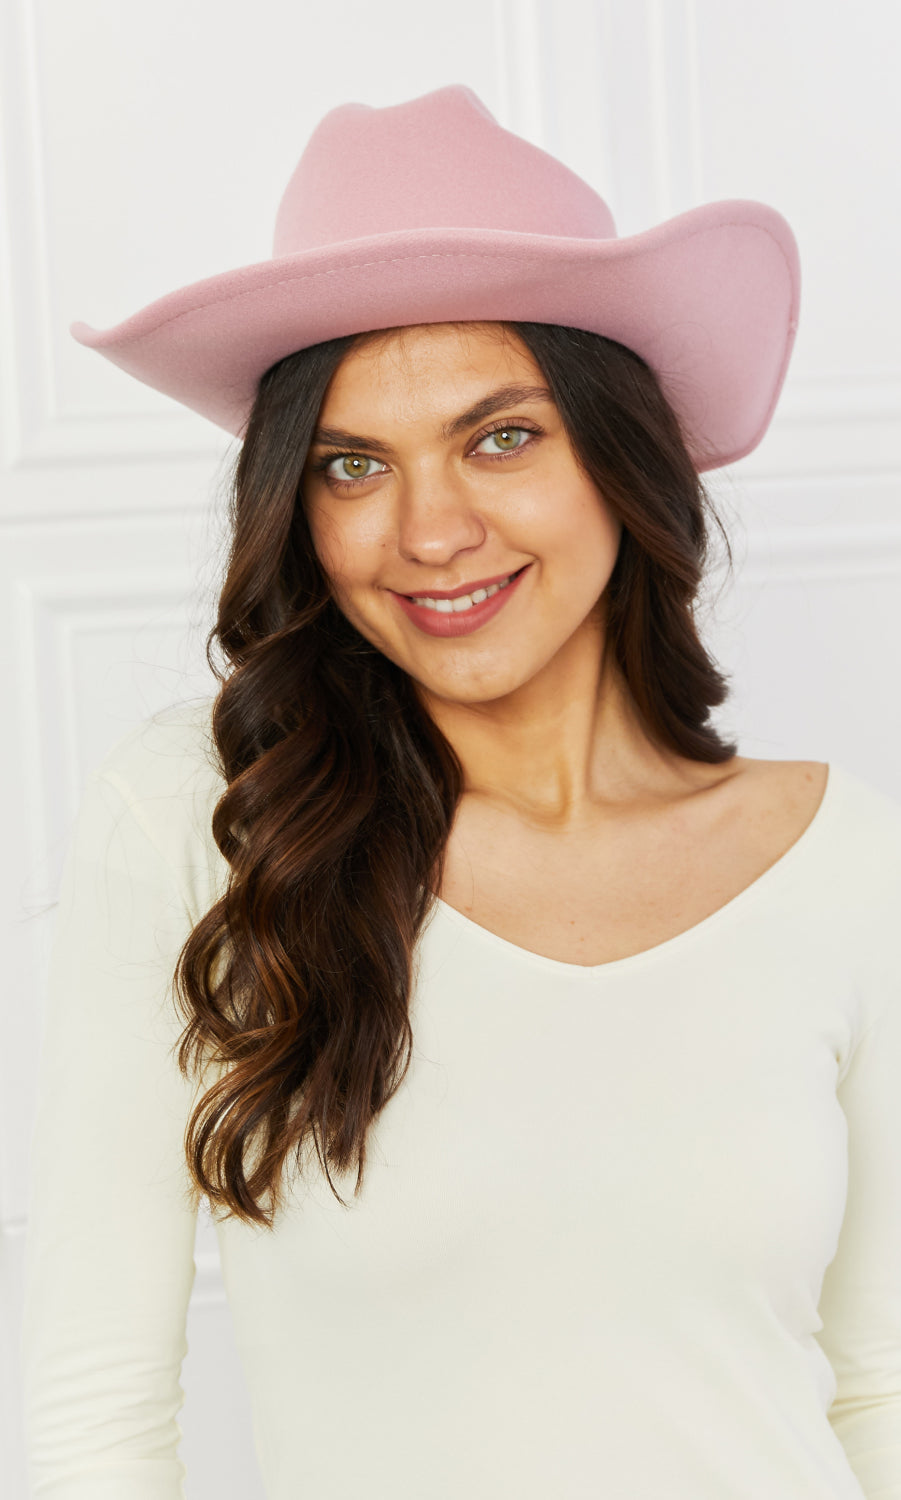 Fame Western Cutie Cowboy Hat in Pink Fame